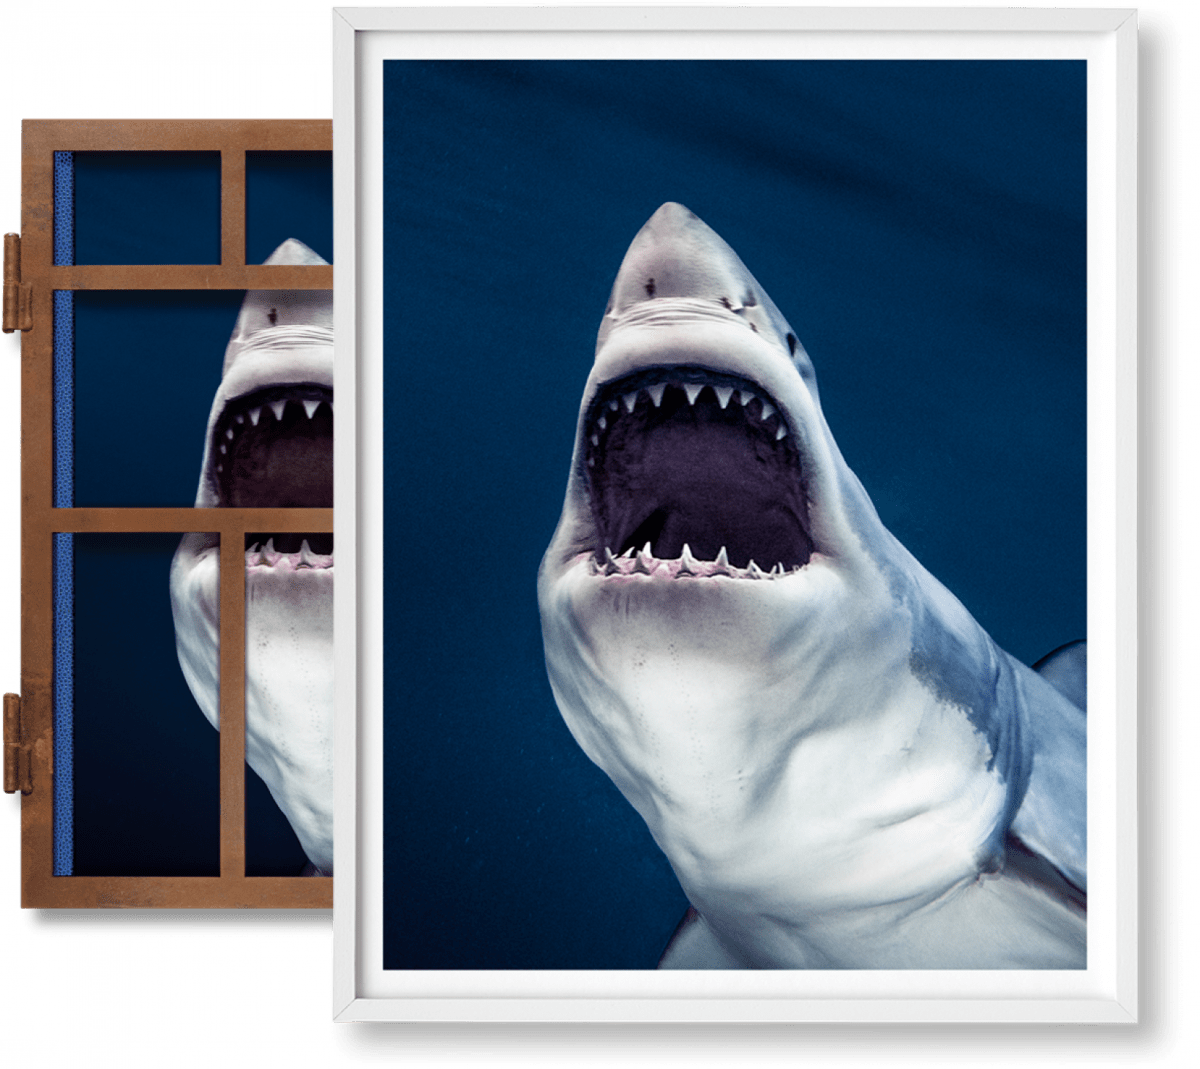 Michael Muller. Sharks, Art Edition No. 1–100 ‘Tear You Apart’